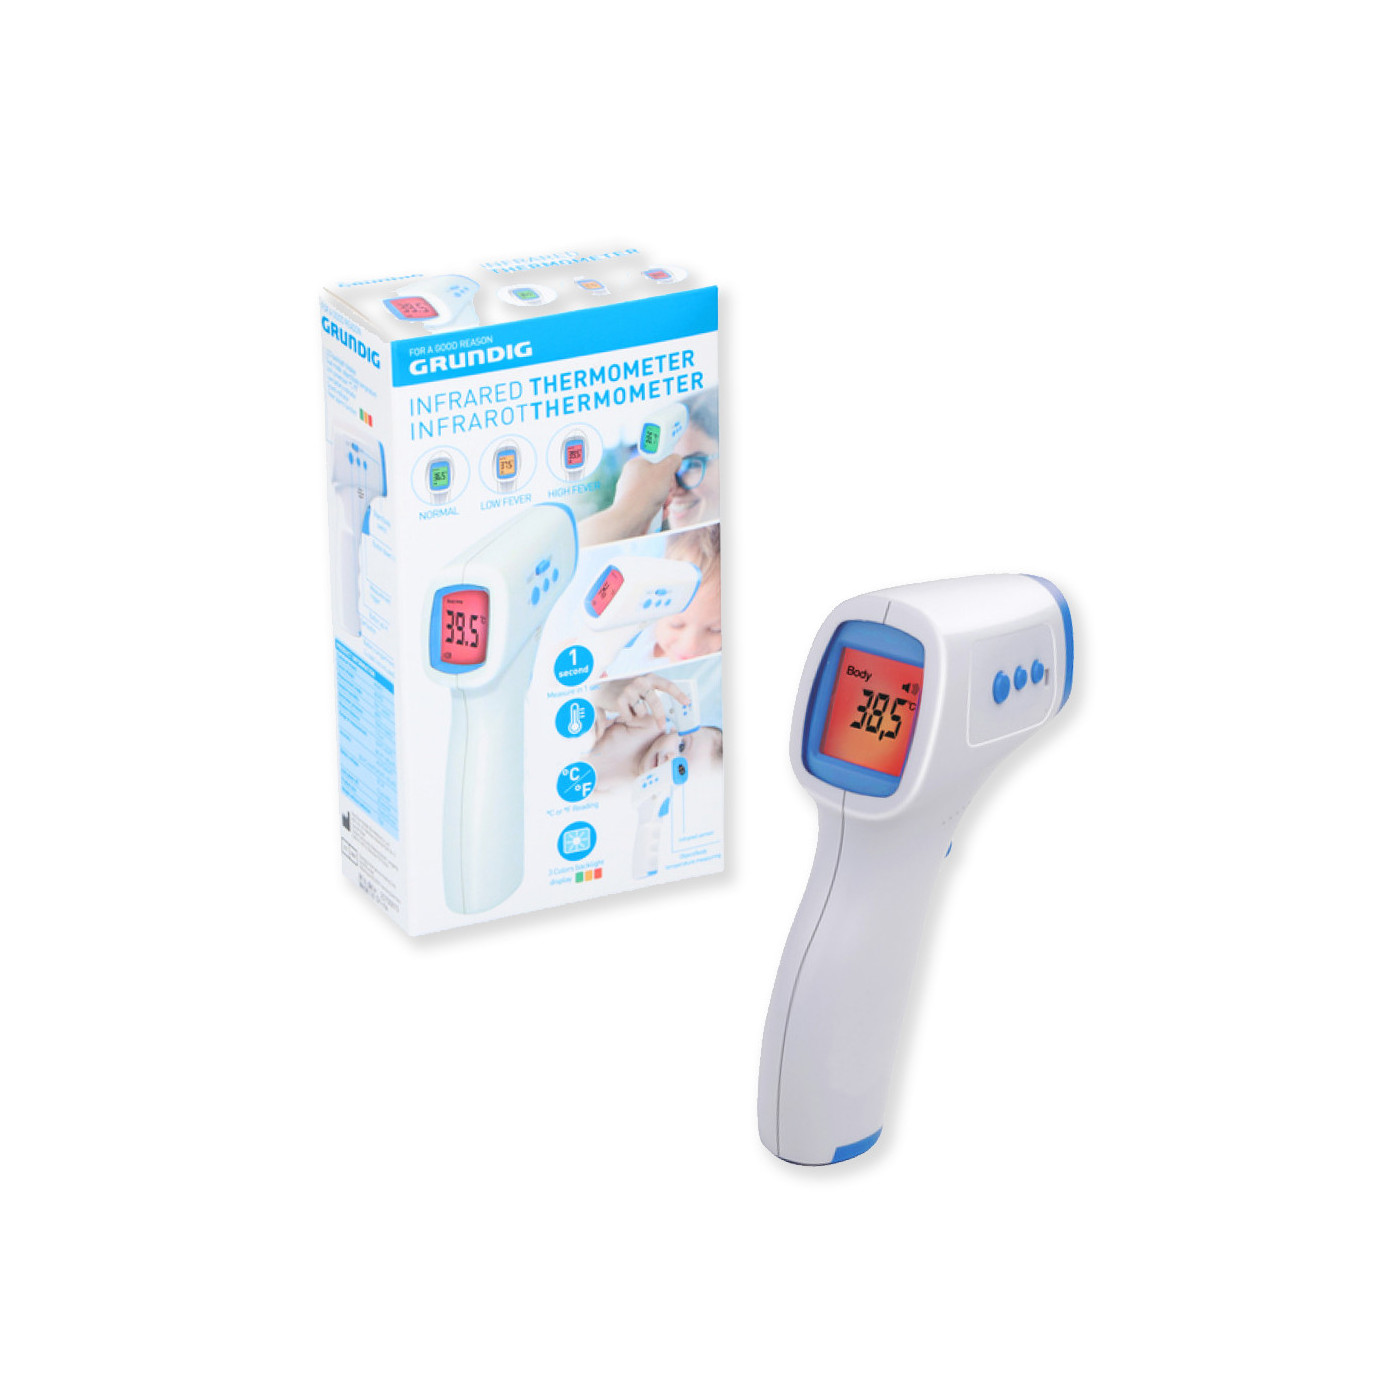 Grundig digitales Infrarot-Thermometer